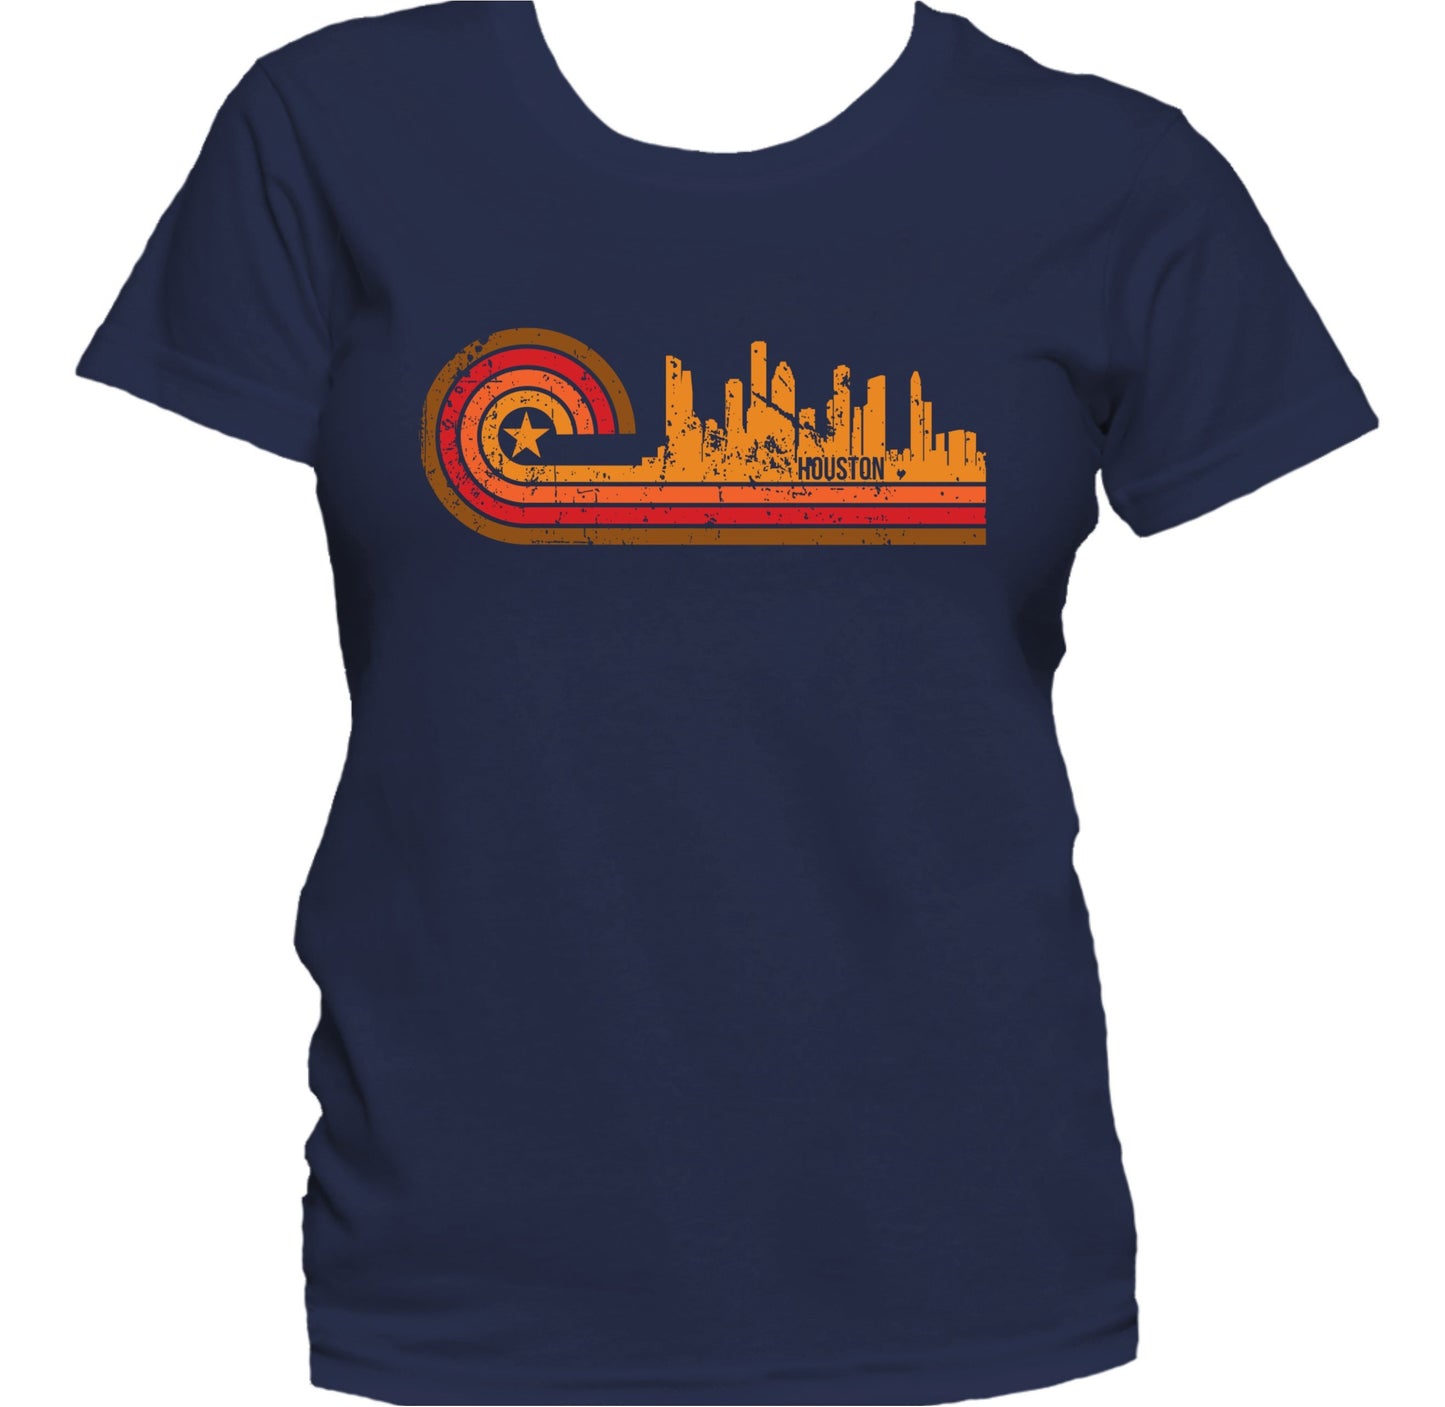 Retro Style Houston Texas Skyline Distressed Women's T-Shirt